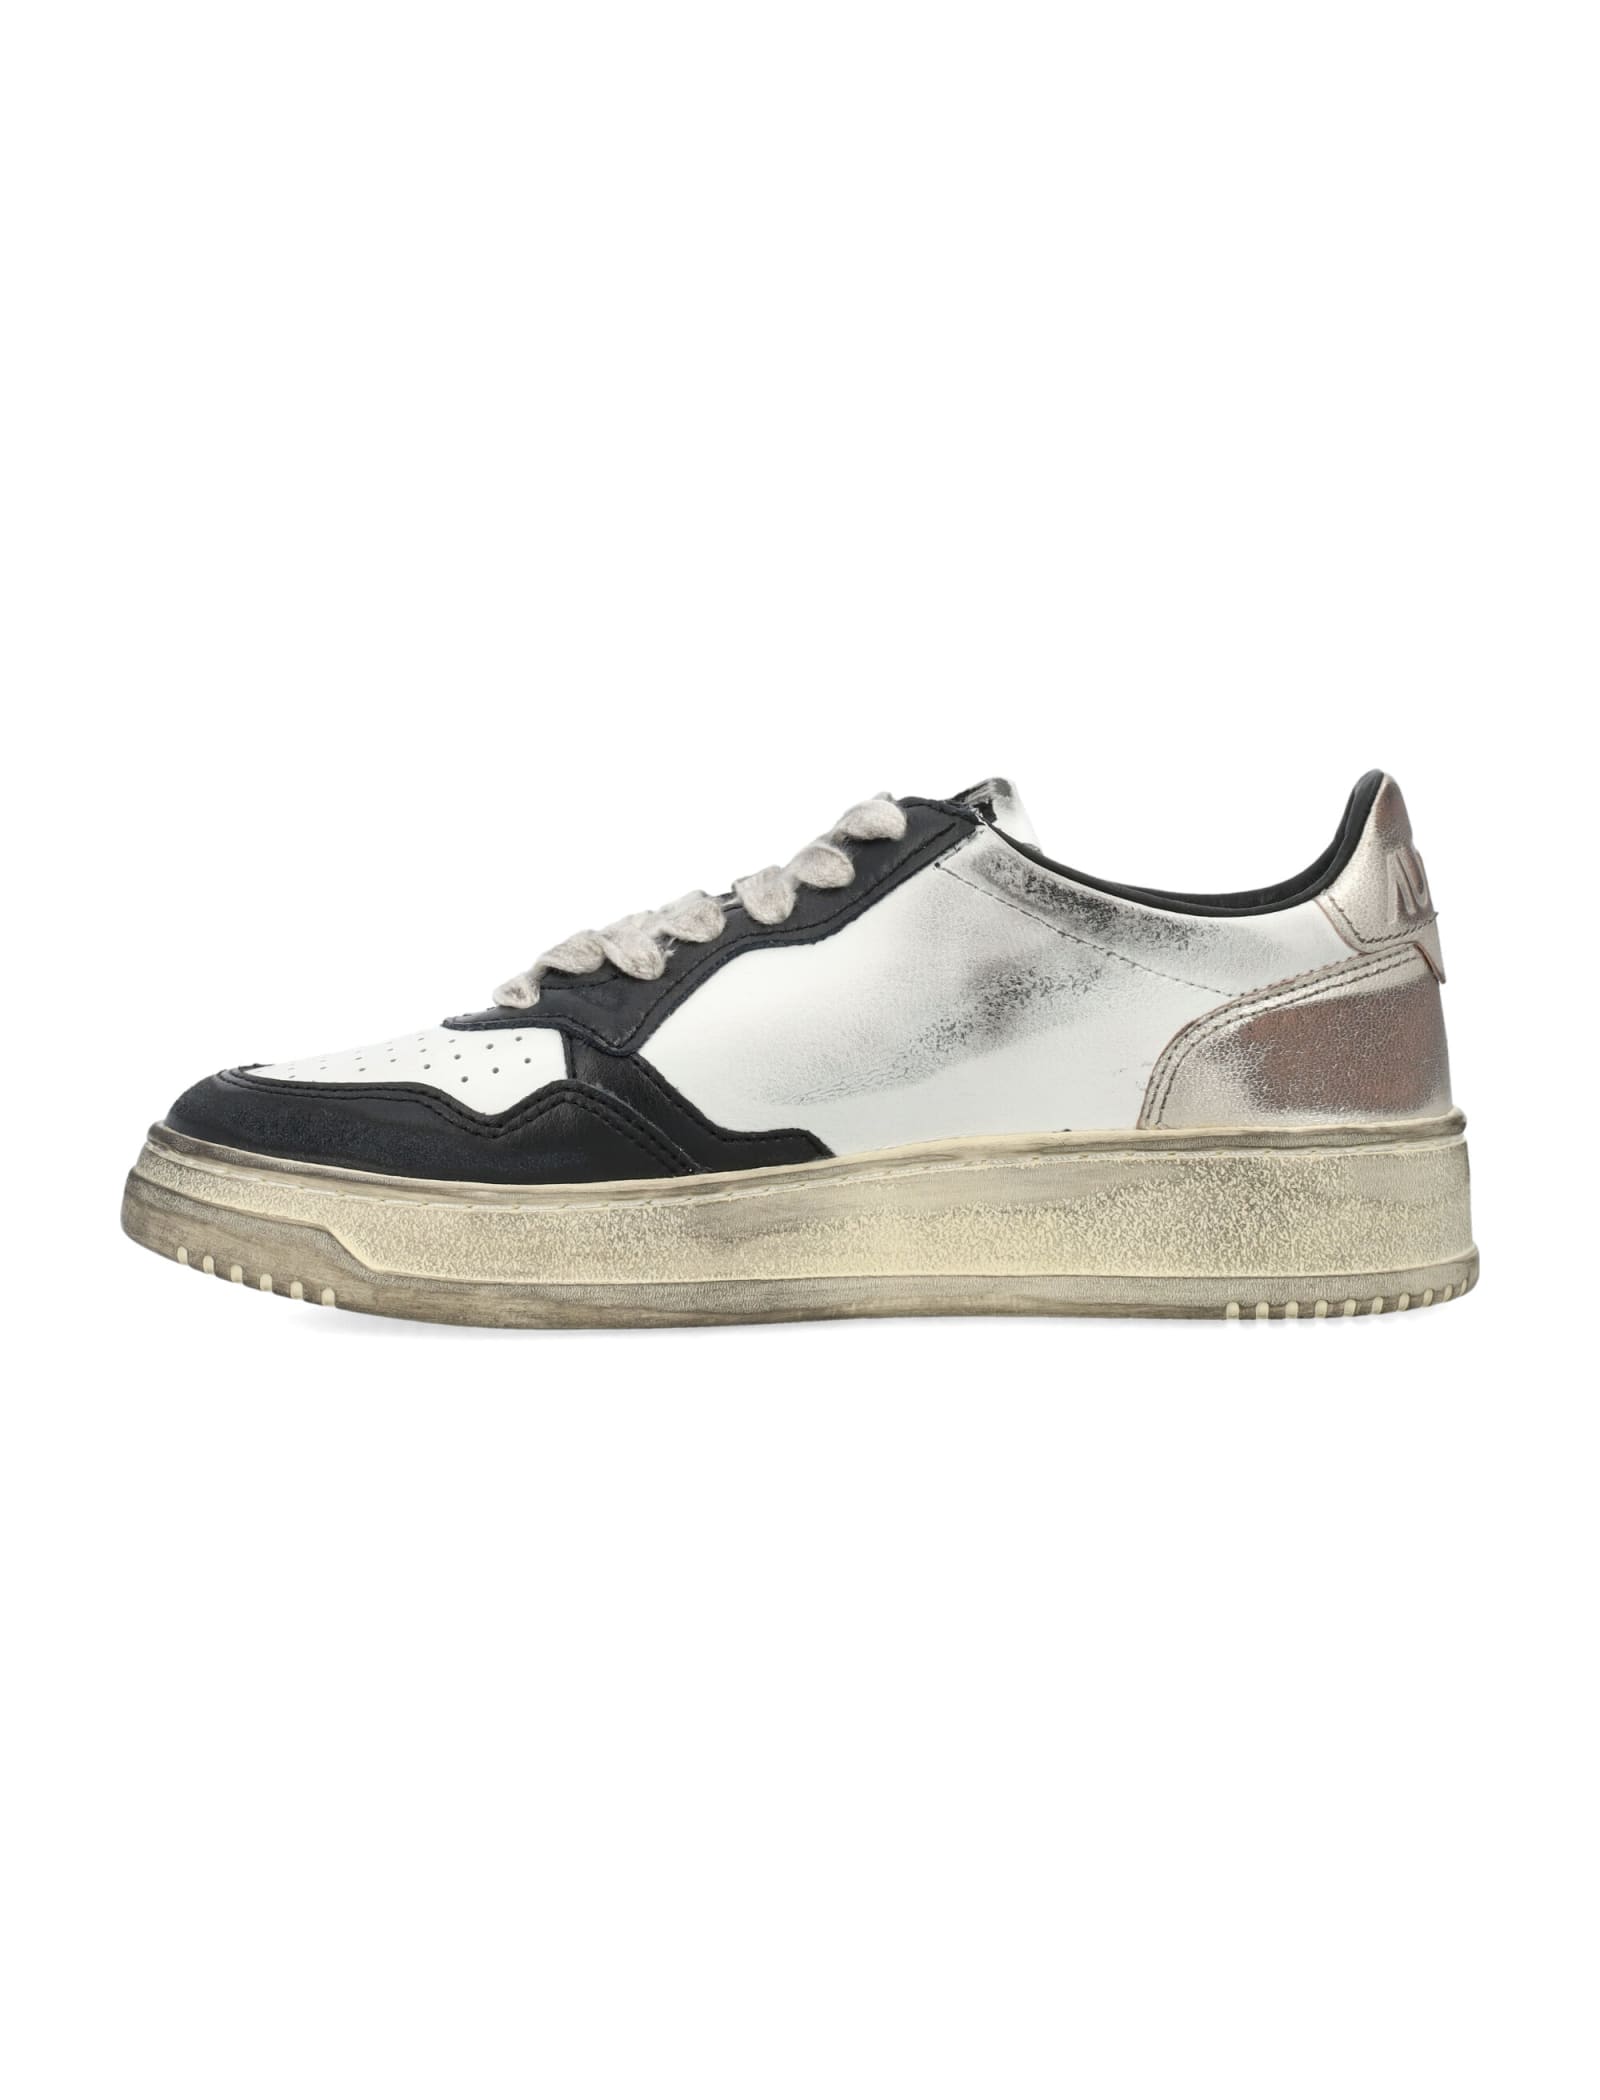 Shop Autry Medalist Super Vintage Low Sneakers In White Black Platinum